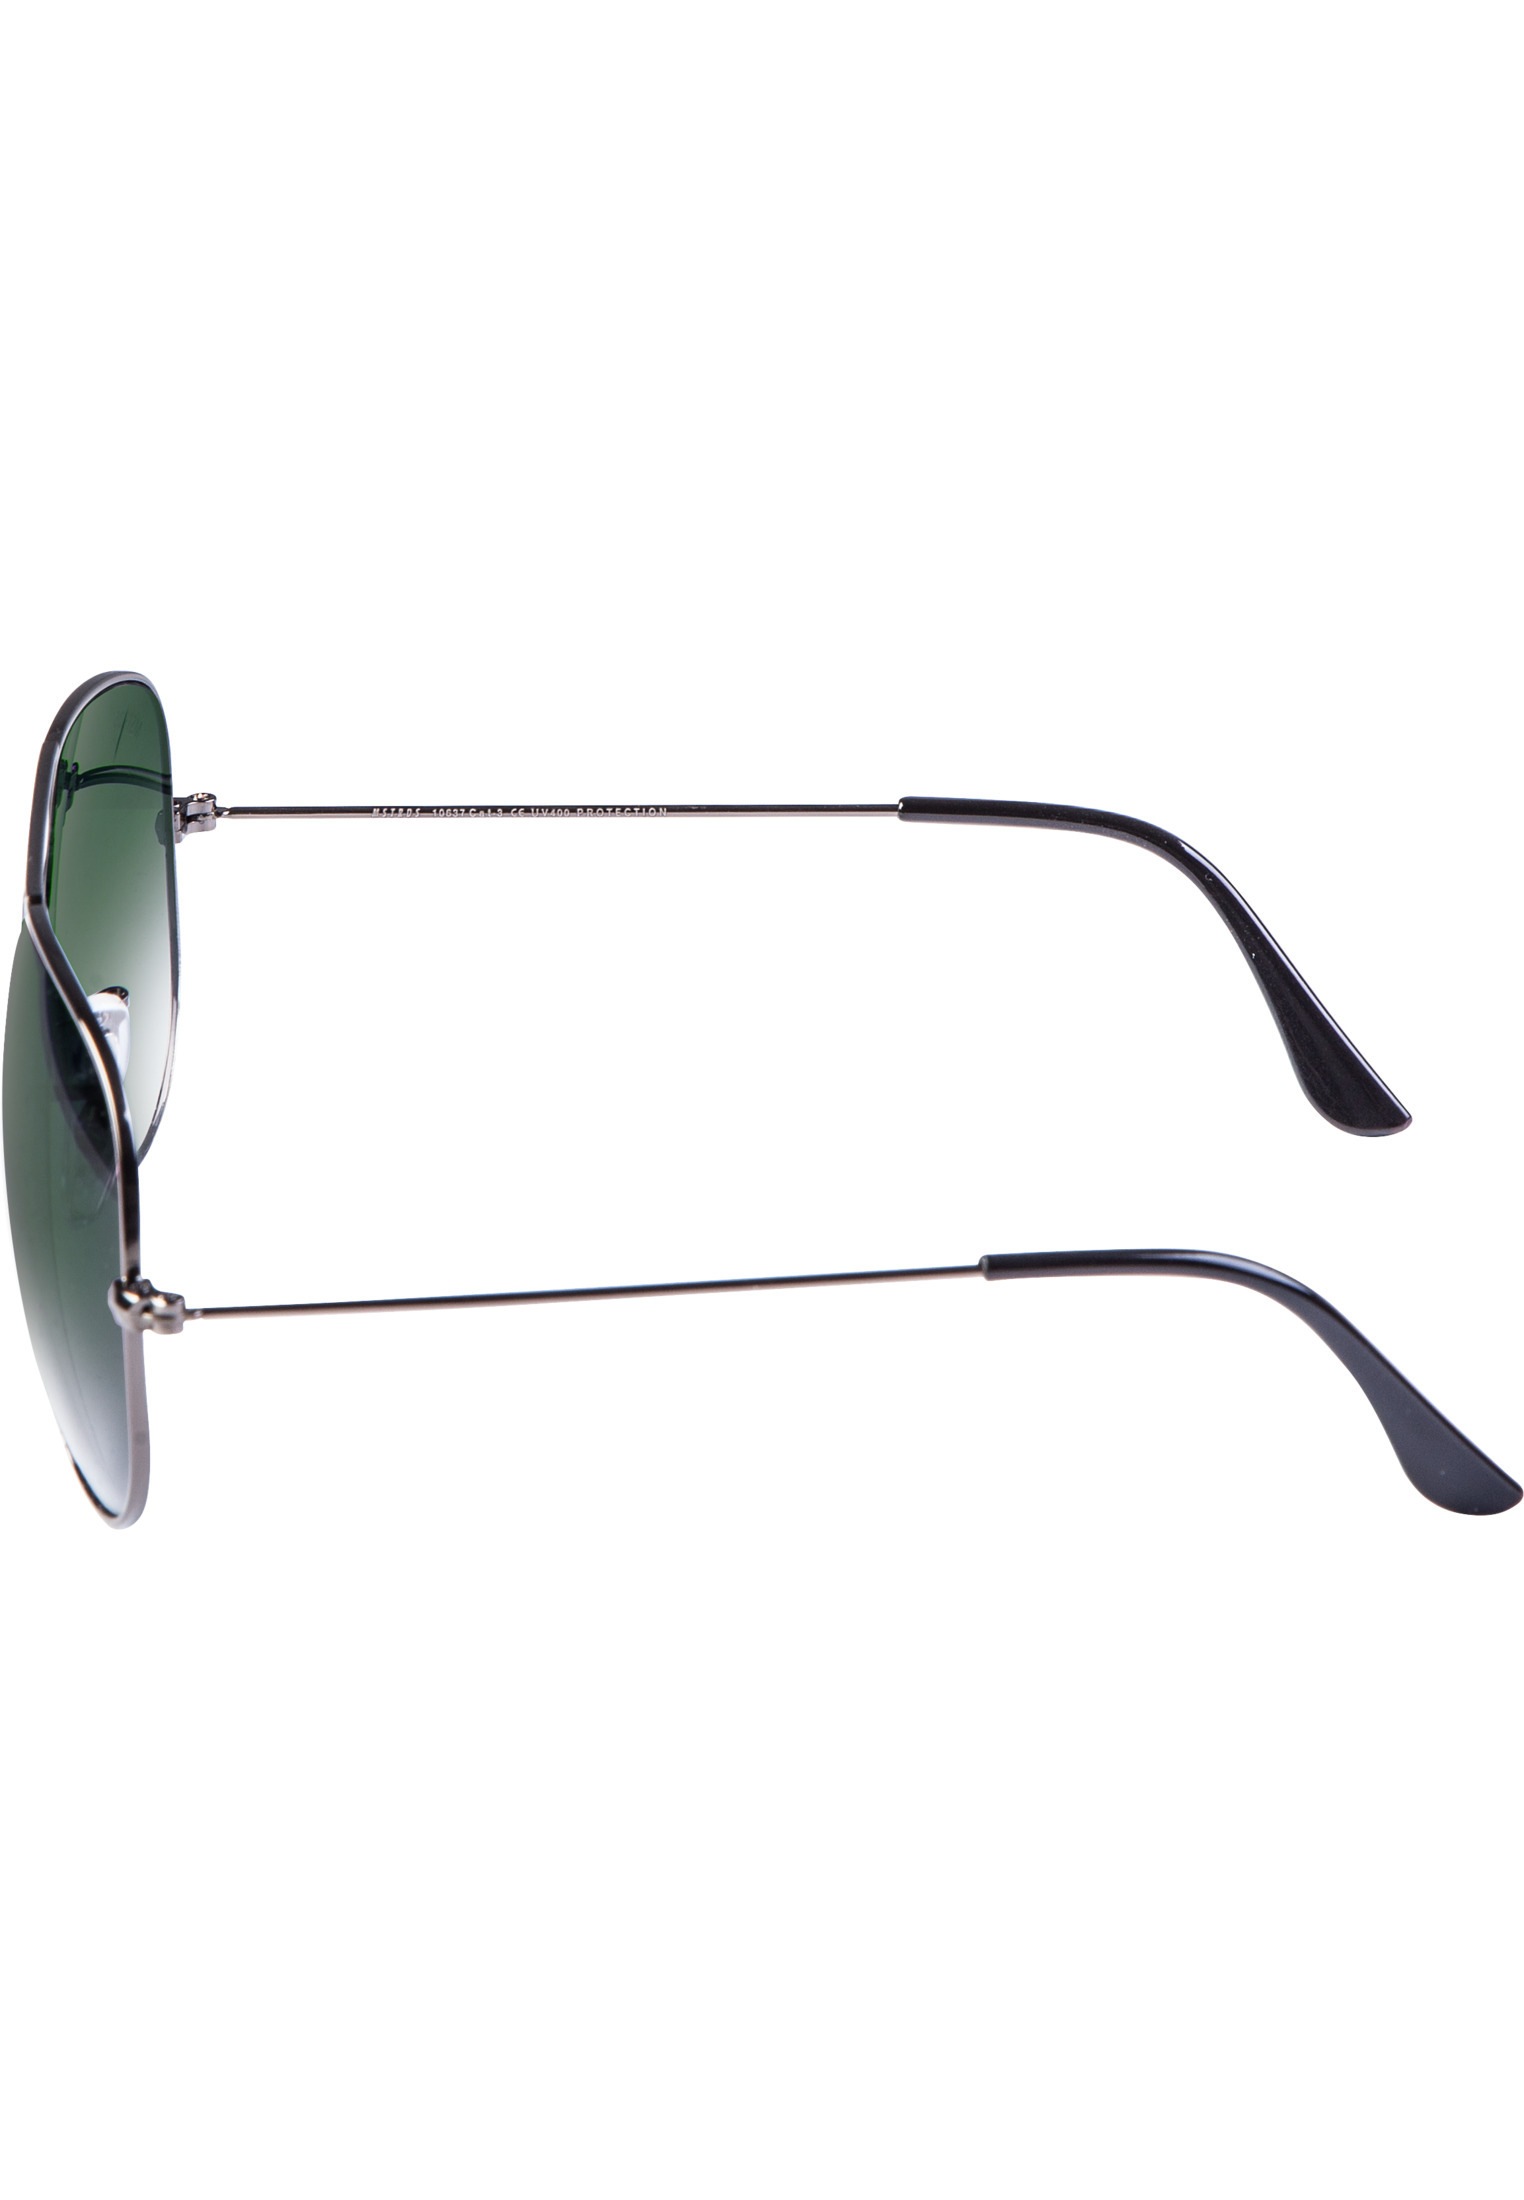 MSTRDS Sonnenbrille »Accessoires BAUR Sunglasses kaufen online | PureAv«